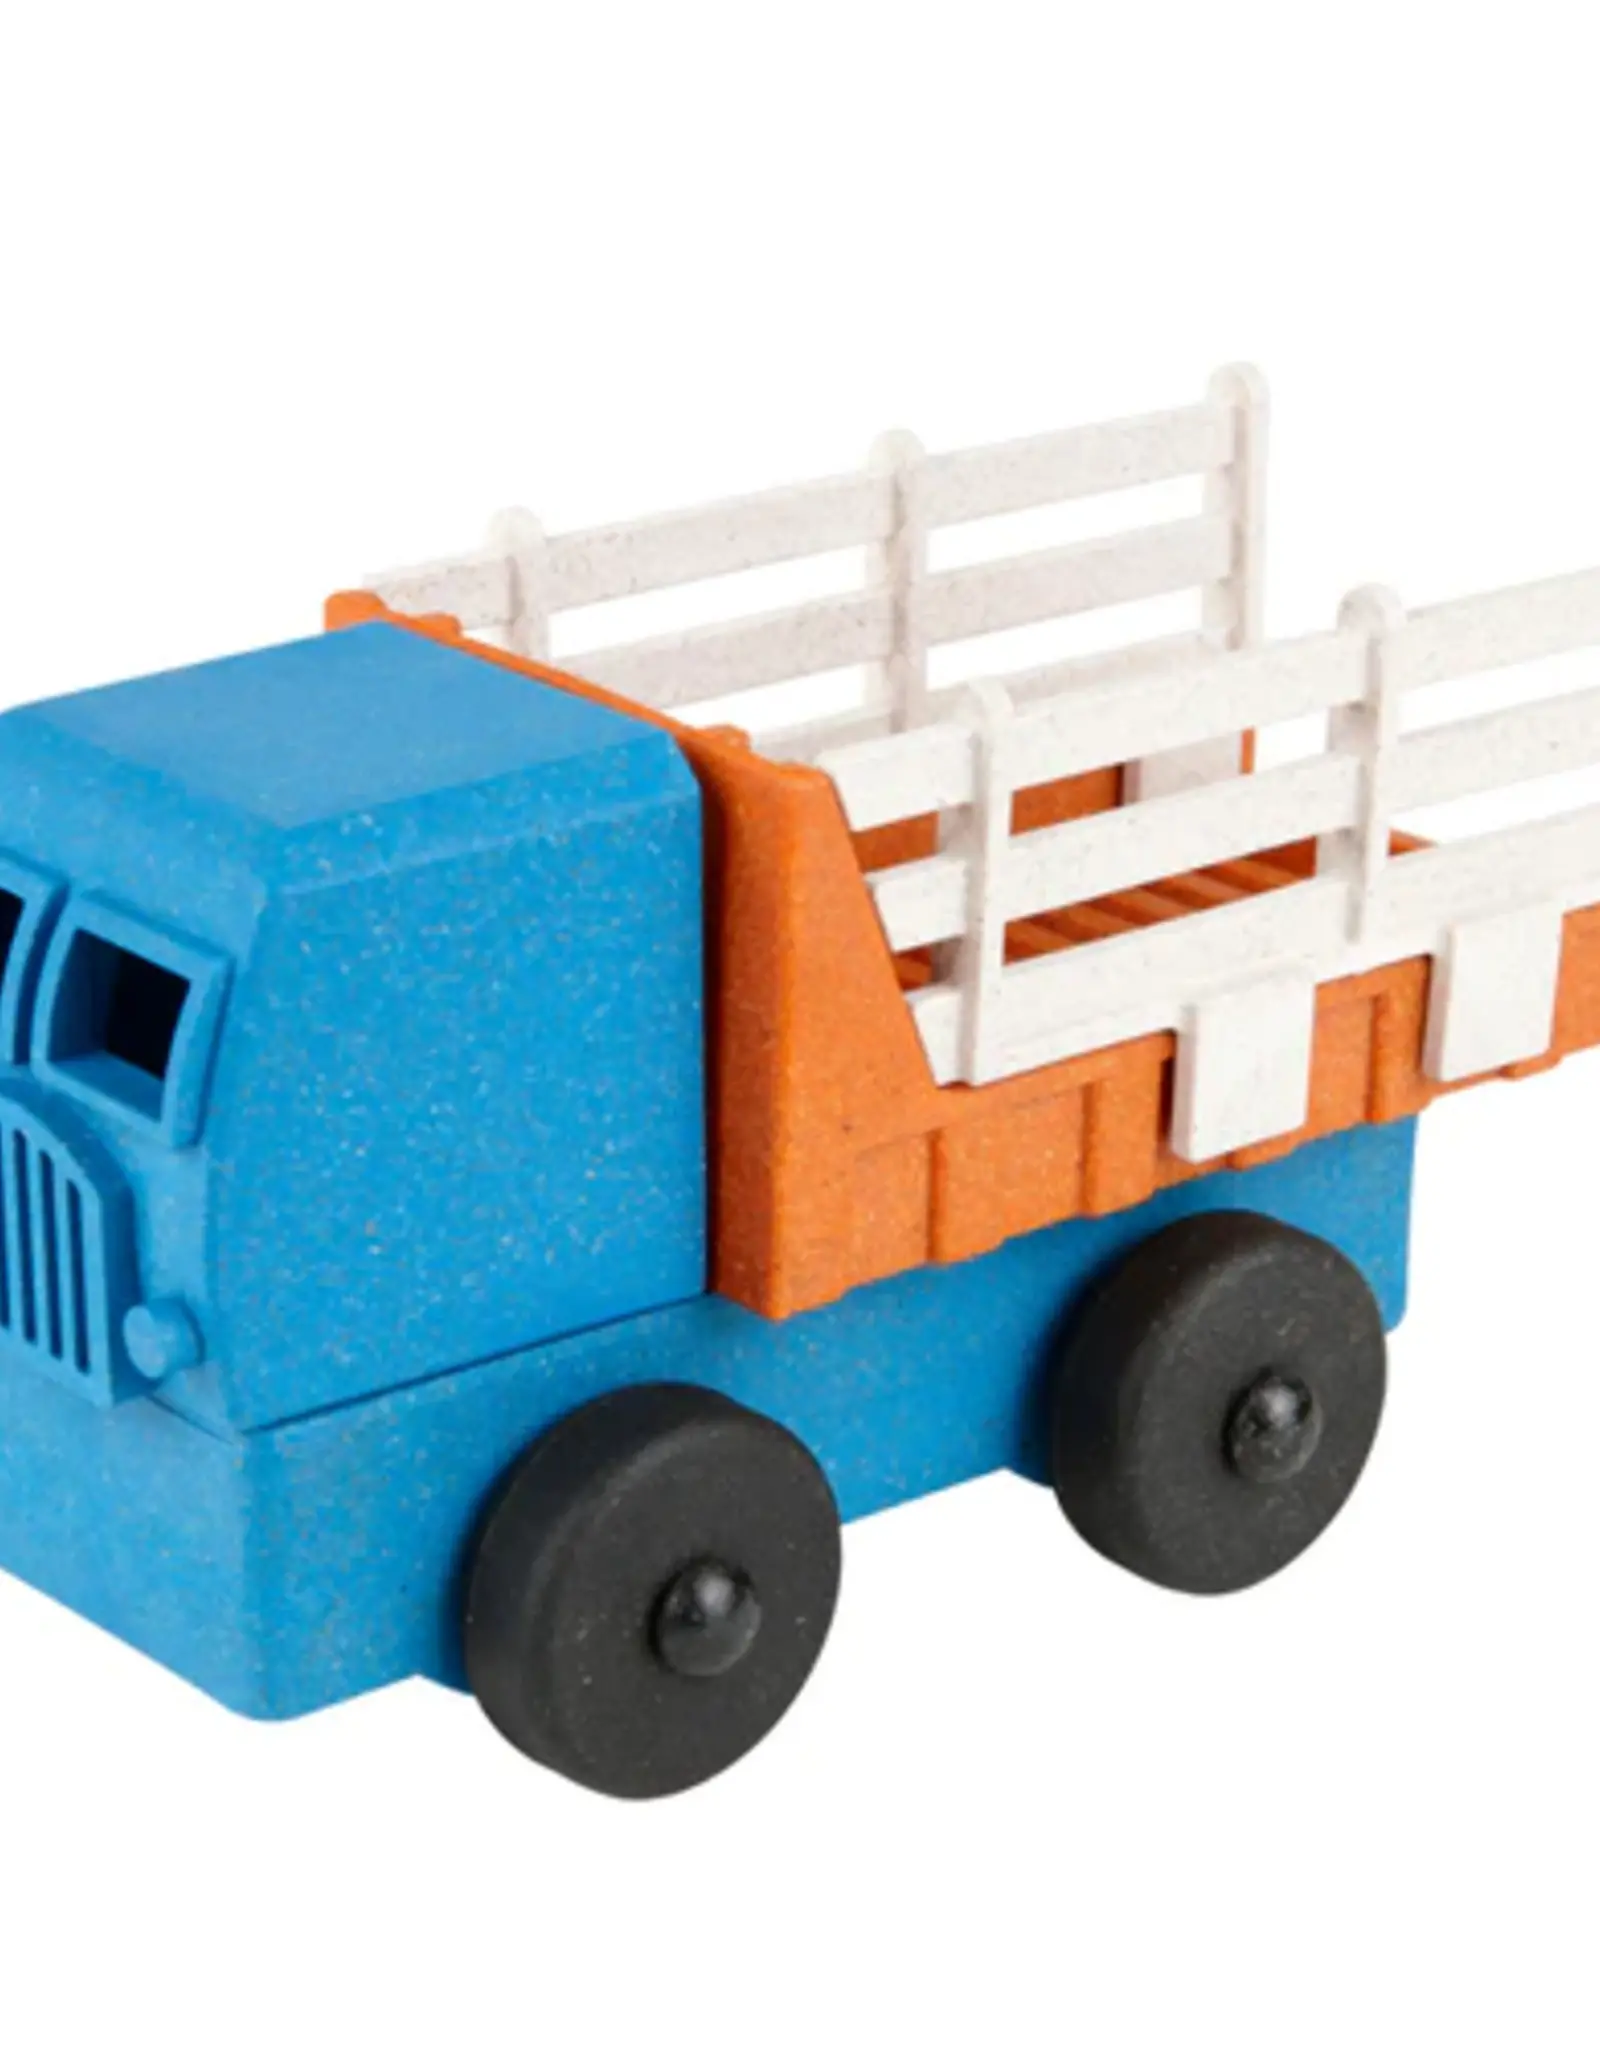 Luke's Toy Factory Stake Truck